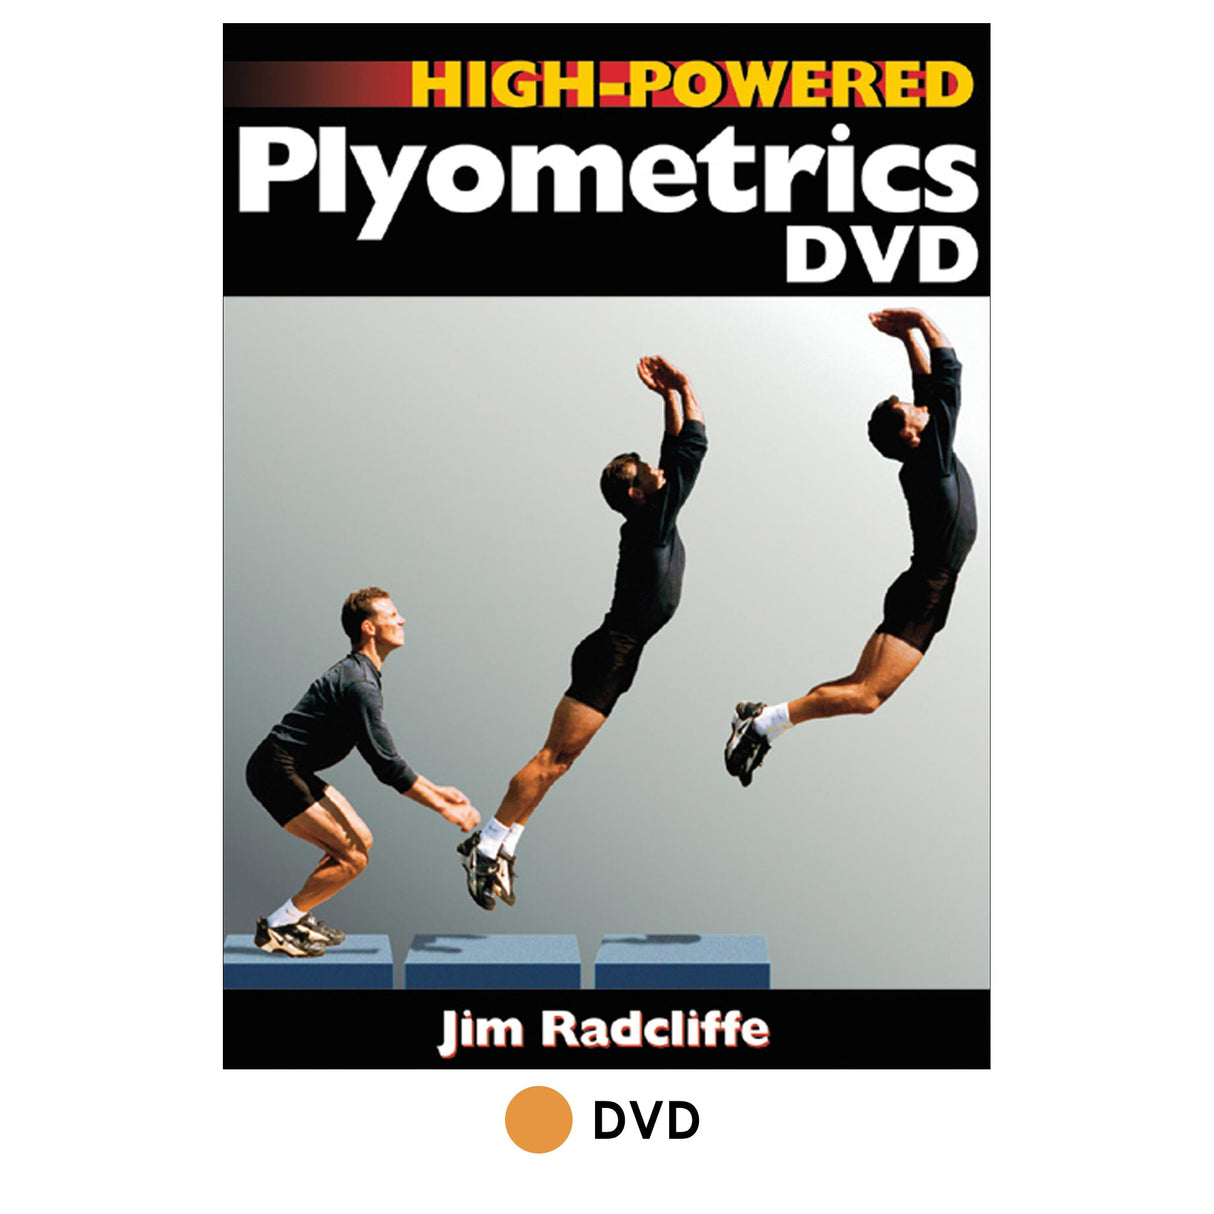 High-Powered Plyometrics DVD